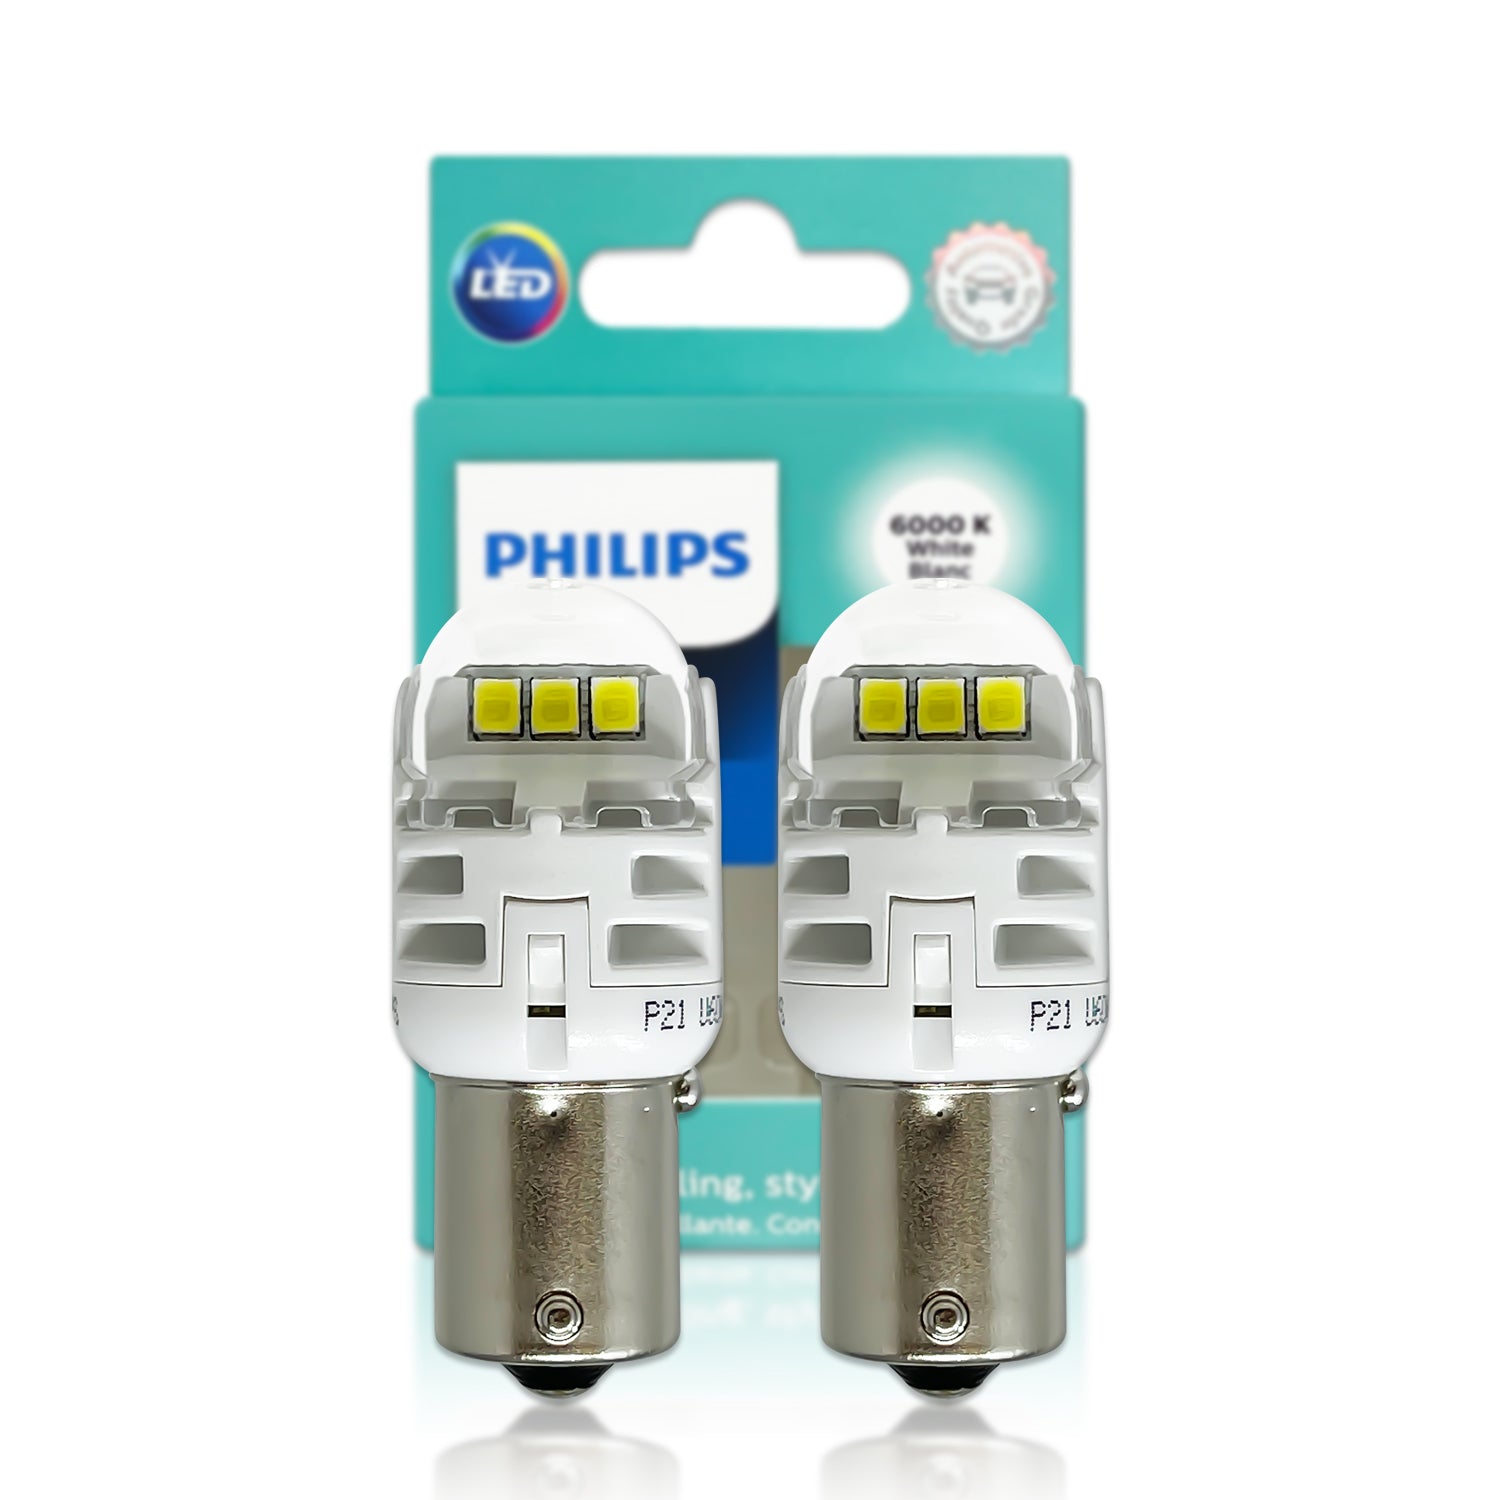 Turn Signal Light Bulb (Amber) - Philips Ultinon LED 1156ALED